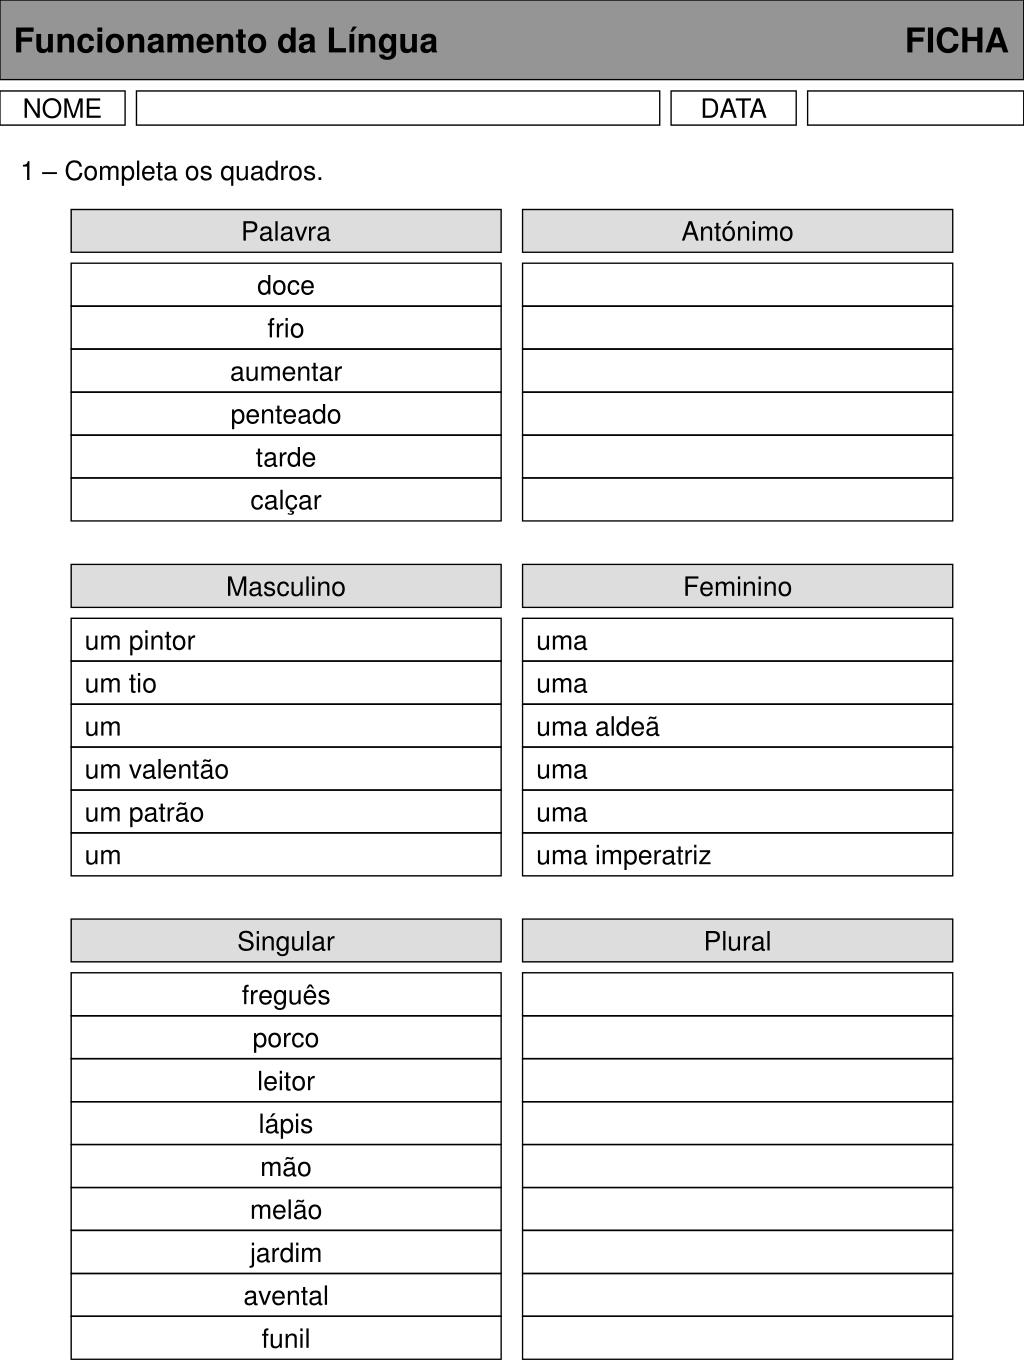 PPT - Funcionamento da Língua FICHA PowerPoint Presentation, free download  - ID:3073820